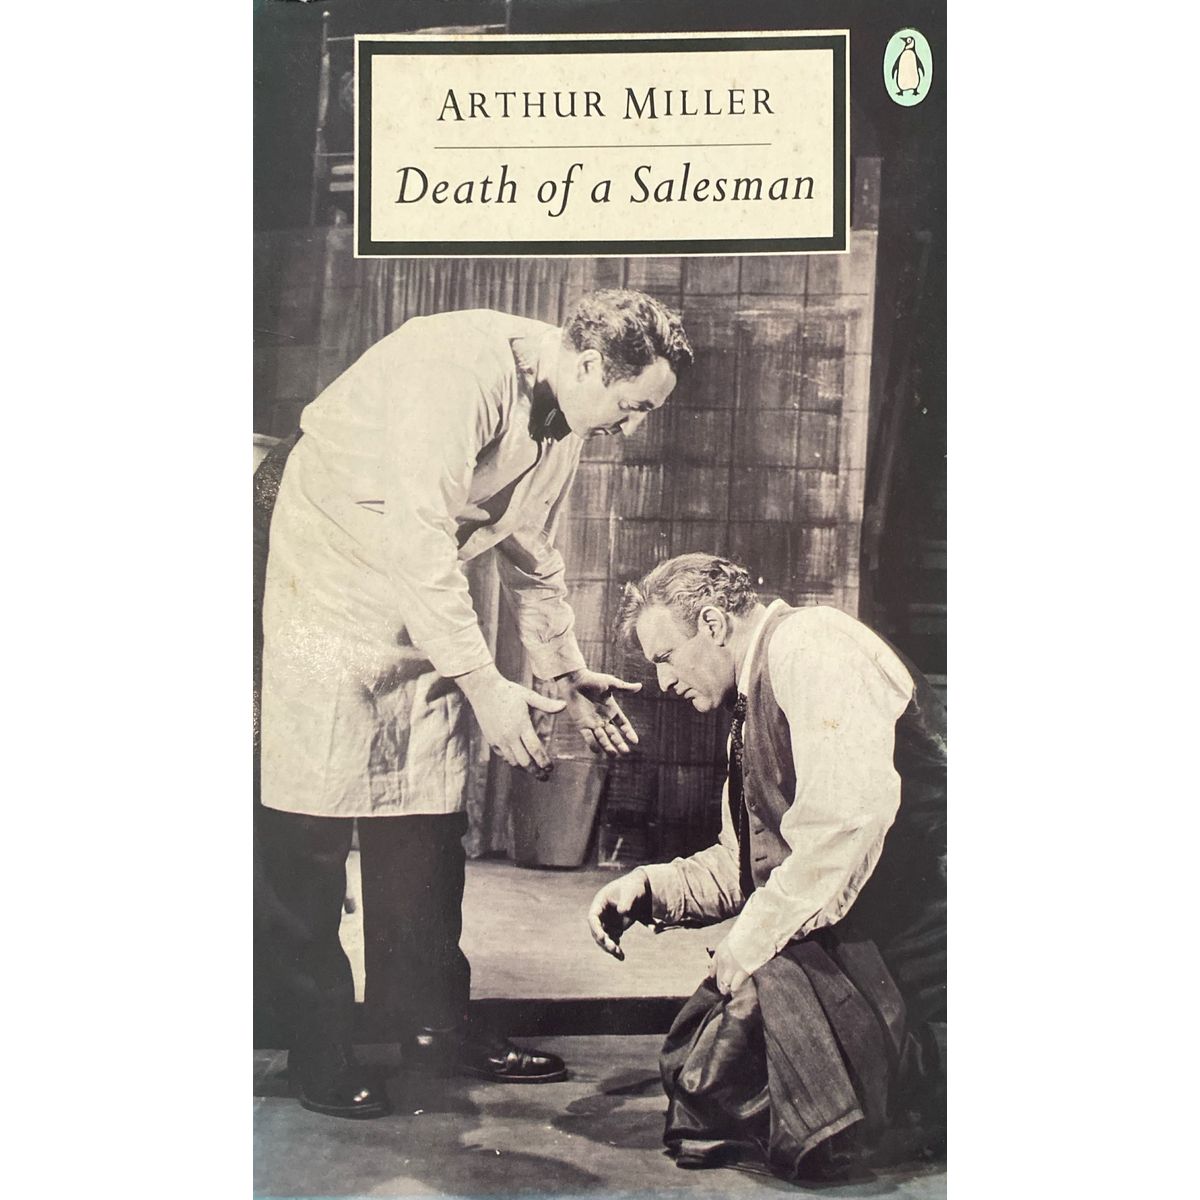 ISBN: 9780140181555 / 0140181555 - Death of a Salesman by Arthur Miller [1989]